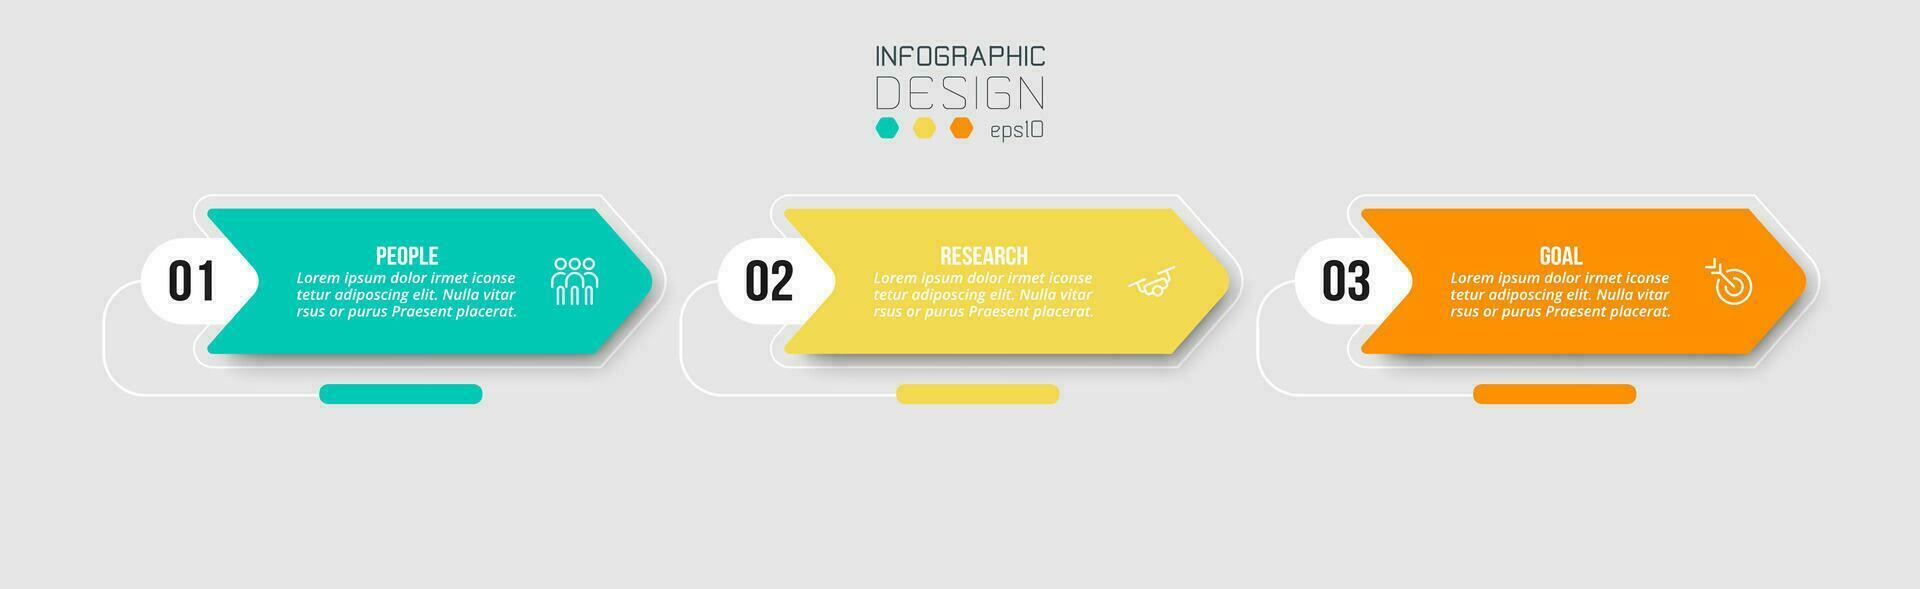 3 Step presentation for business infographic vector design.